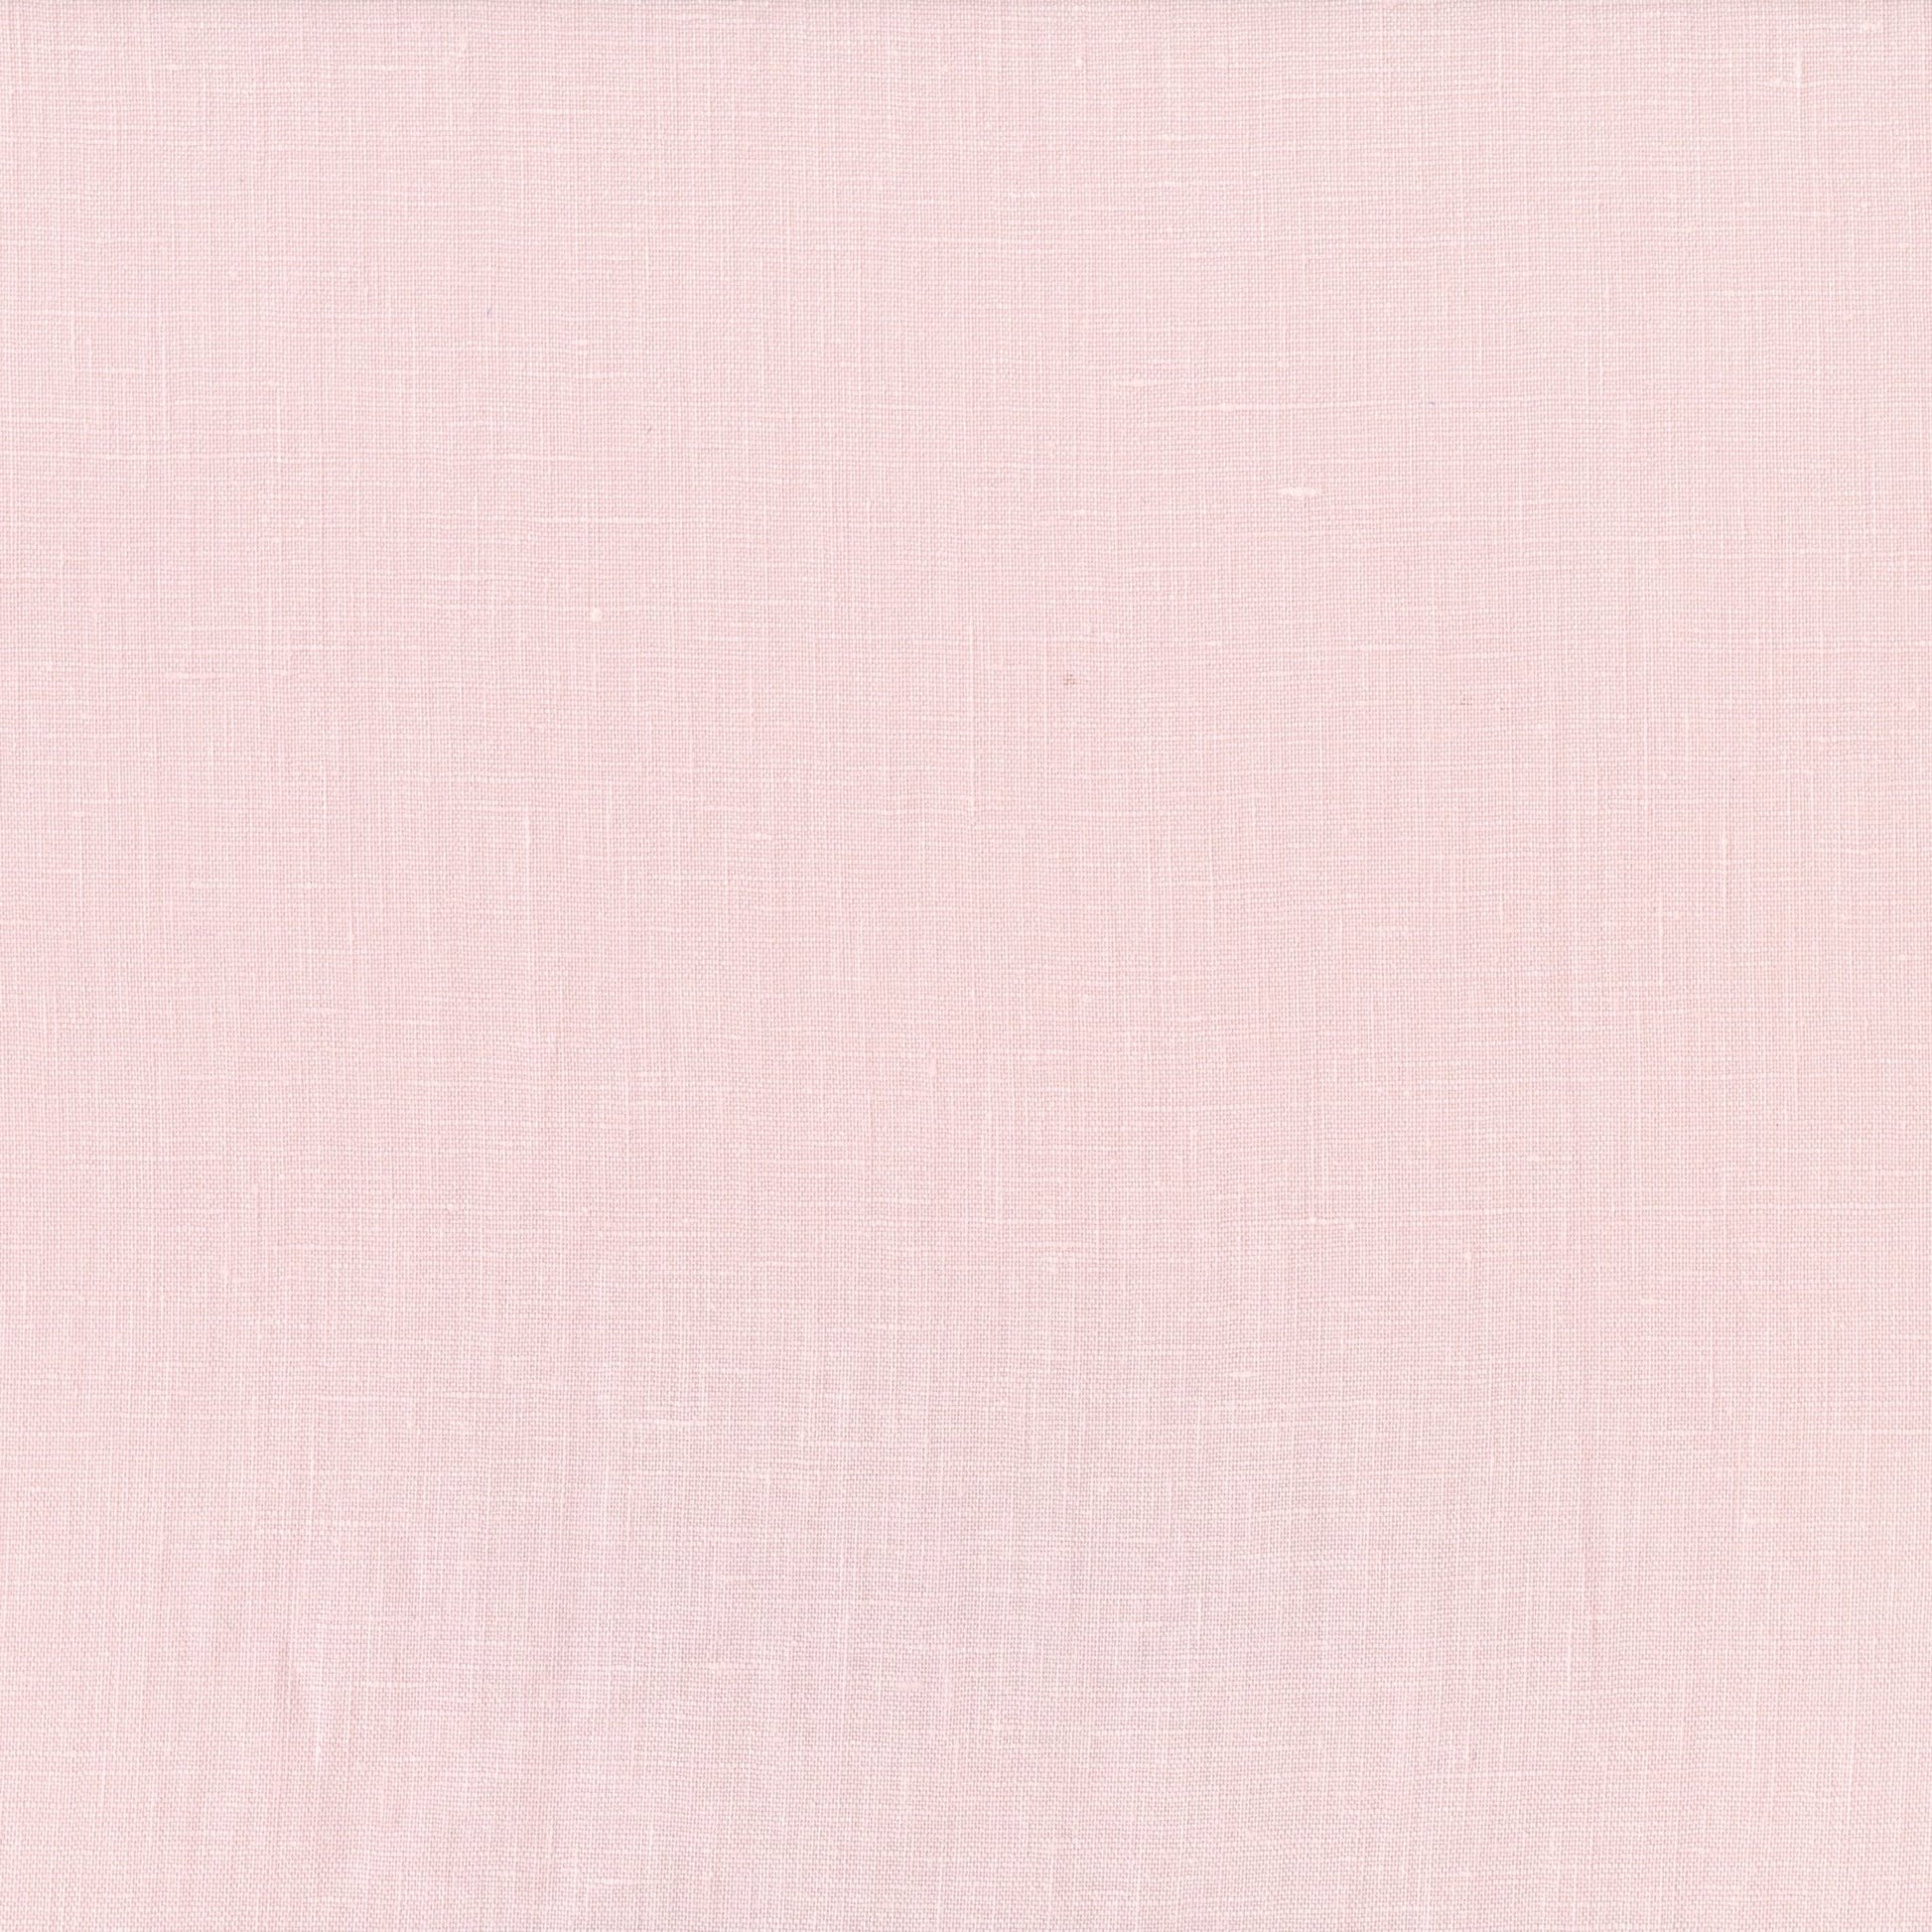 Dusty Pink Linen - New Arrivals Inc